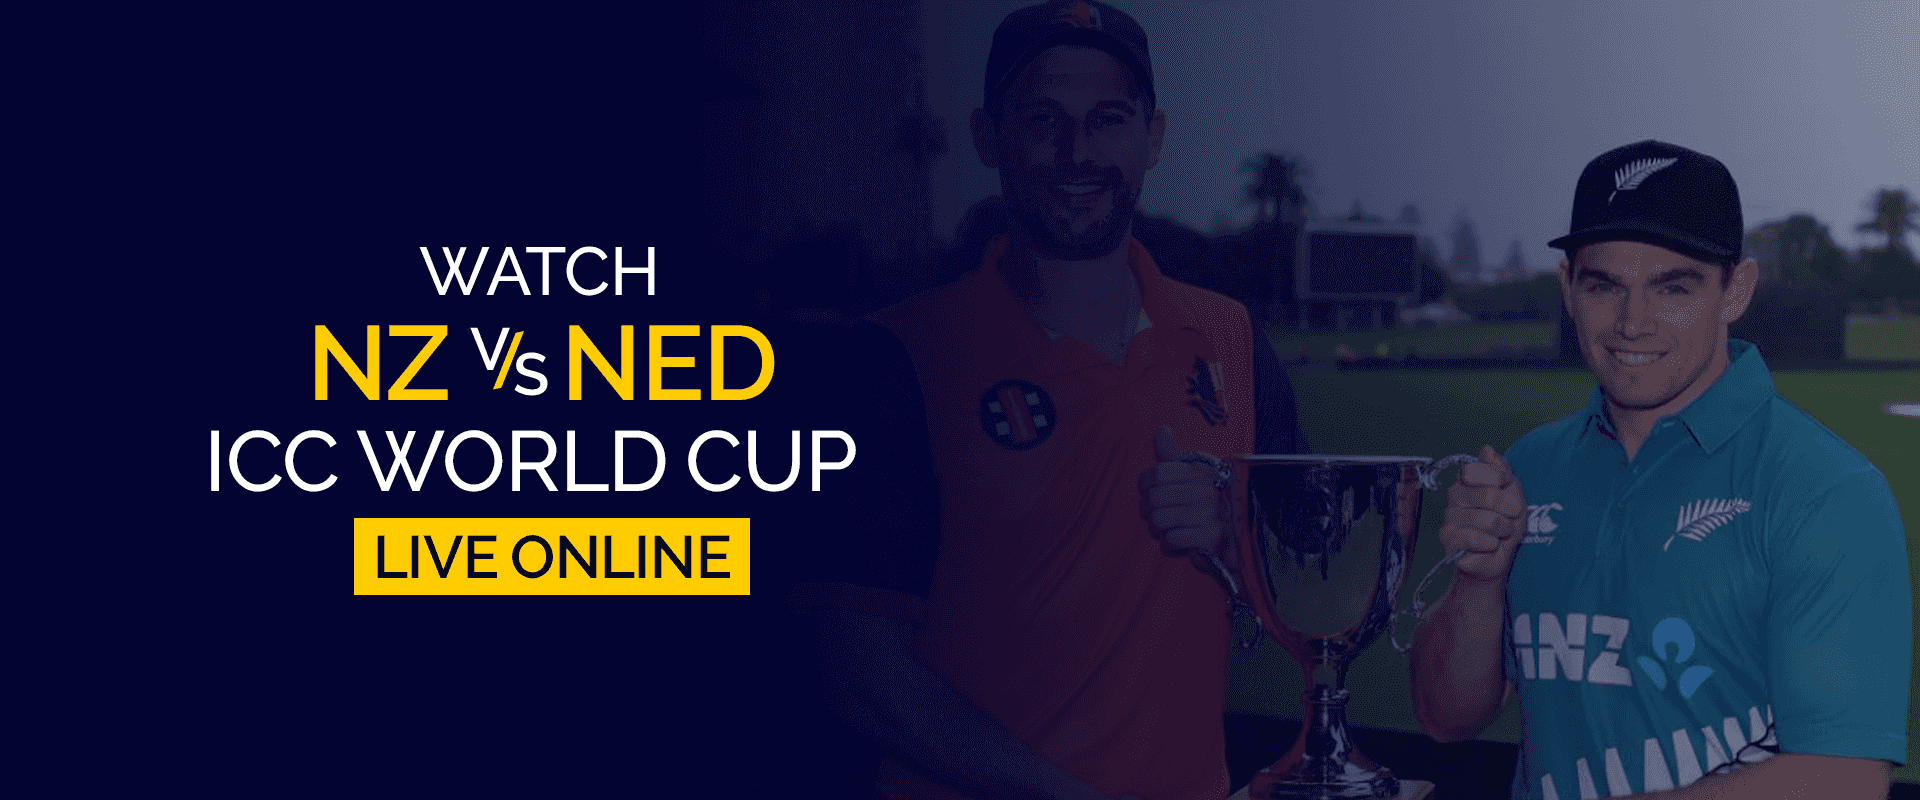 Vea la Copa Mundial NZ vs NED ICC en vivo en línea